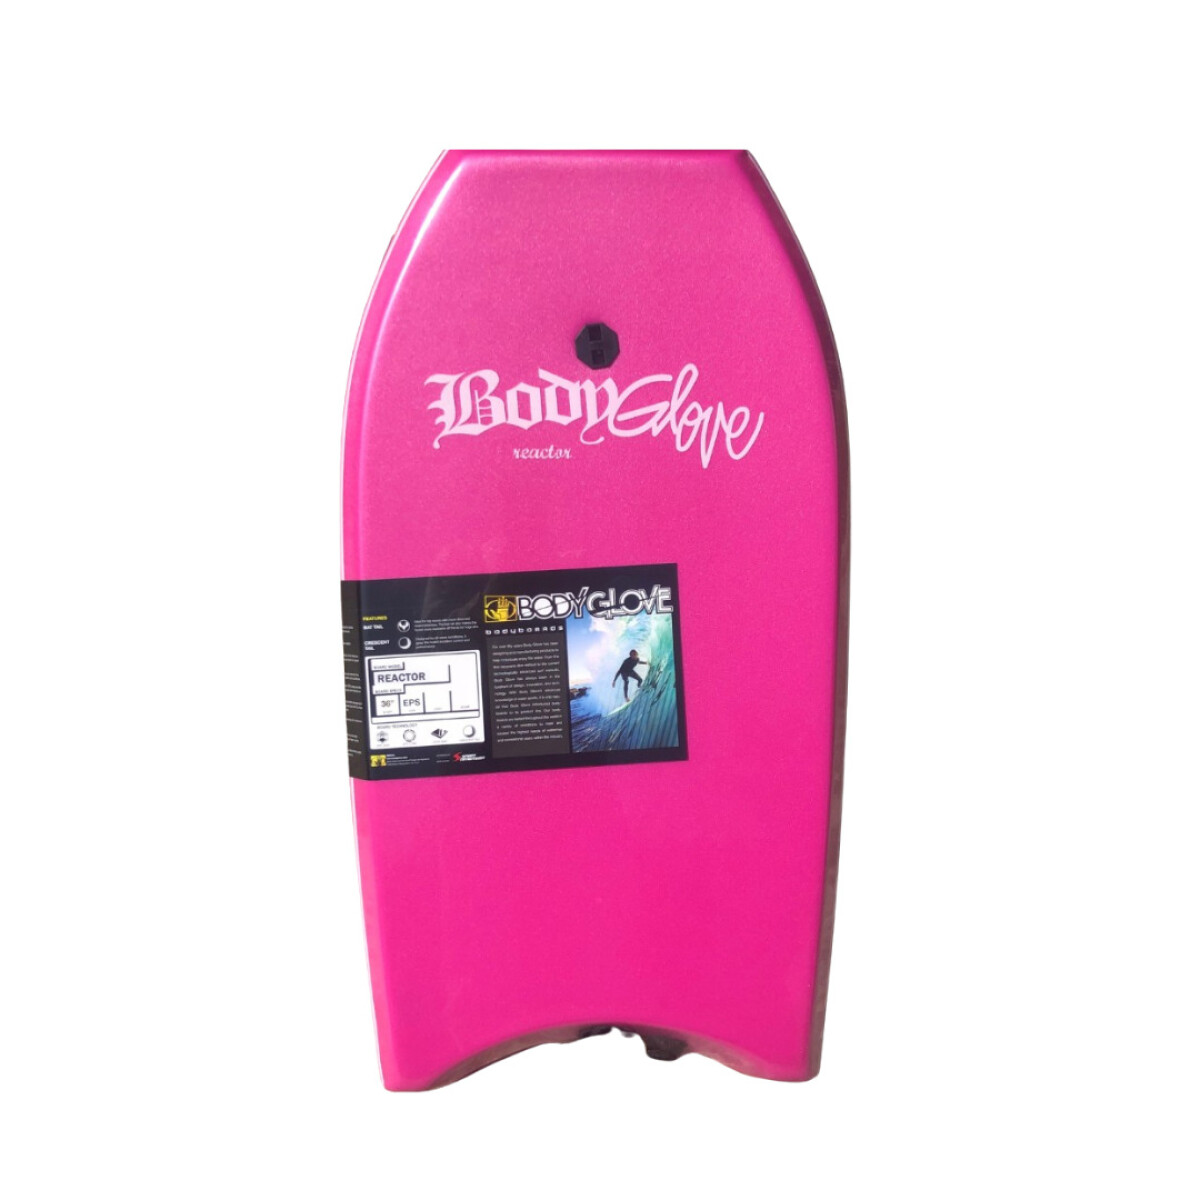 Tabla BodyBoard Morey Body Glove Reactor 36 - Rosa 